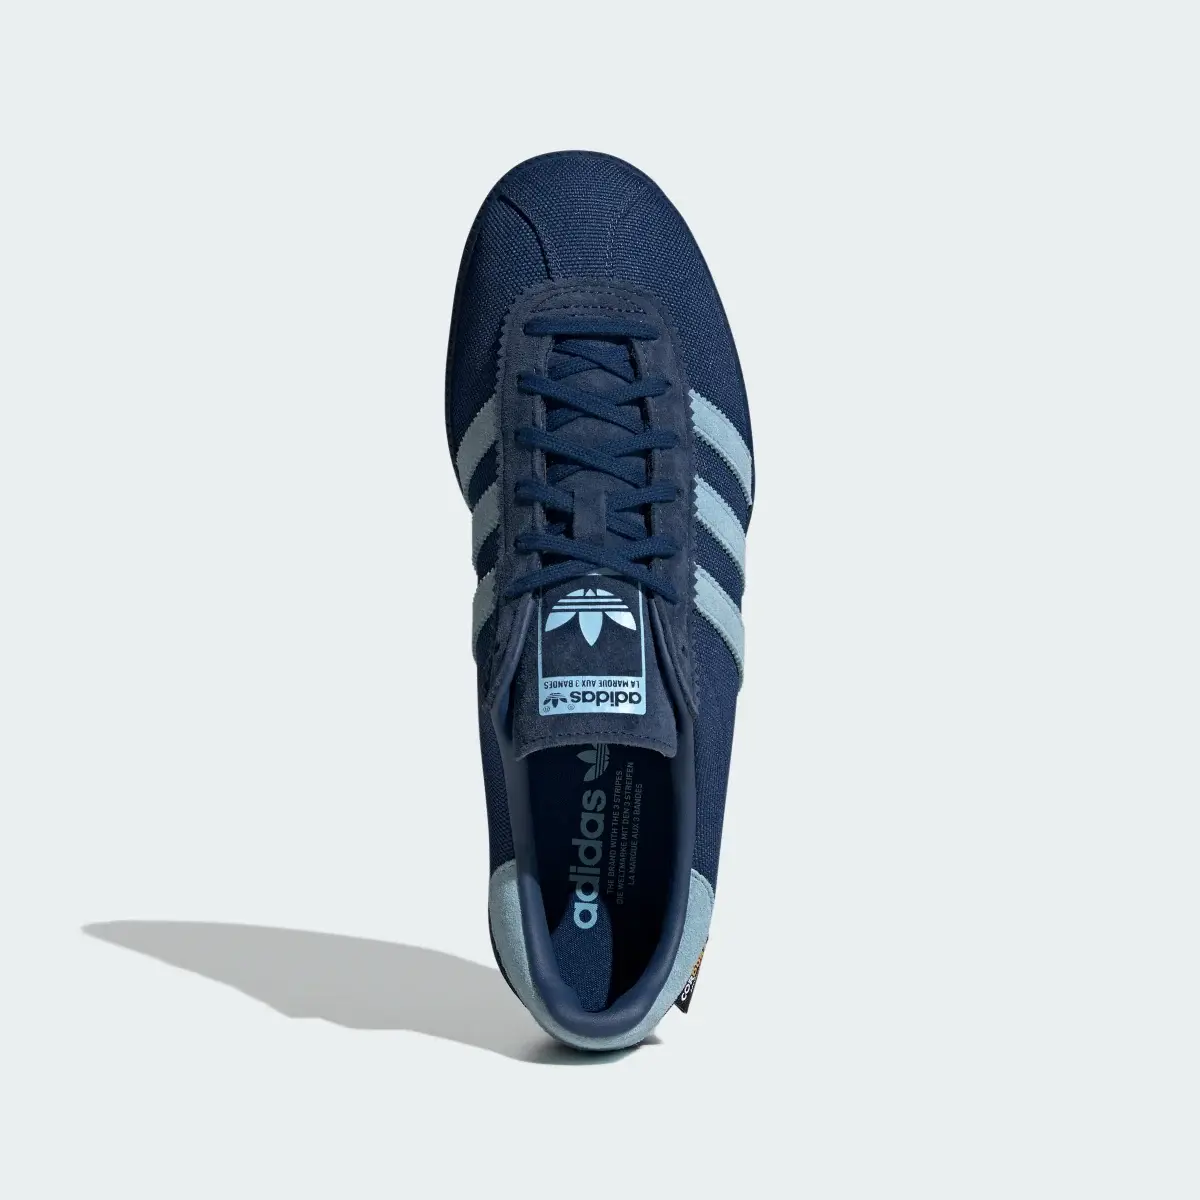 Adidas Bermuda Shoes. 3